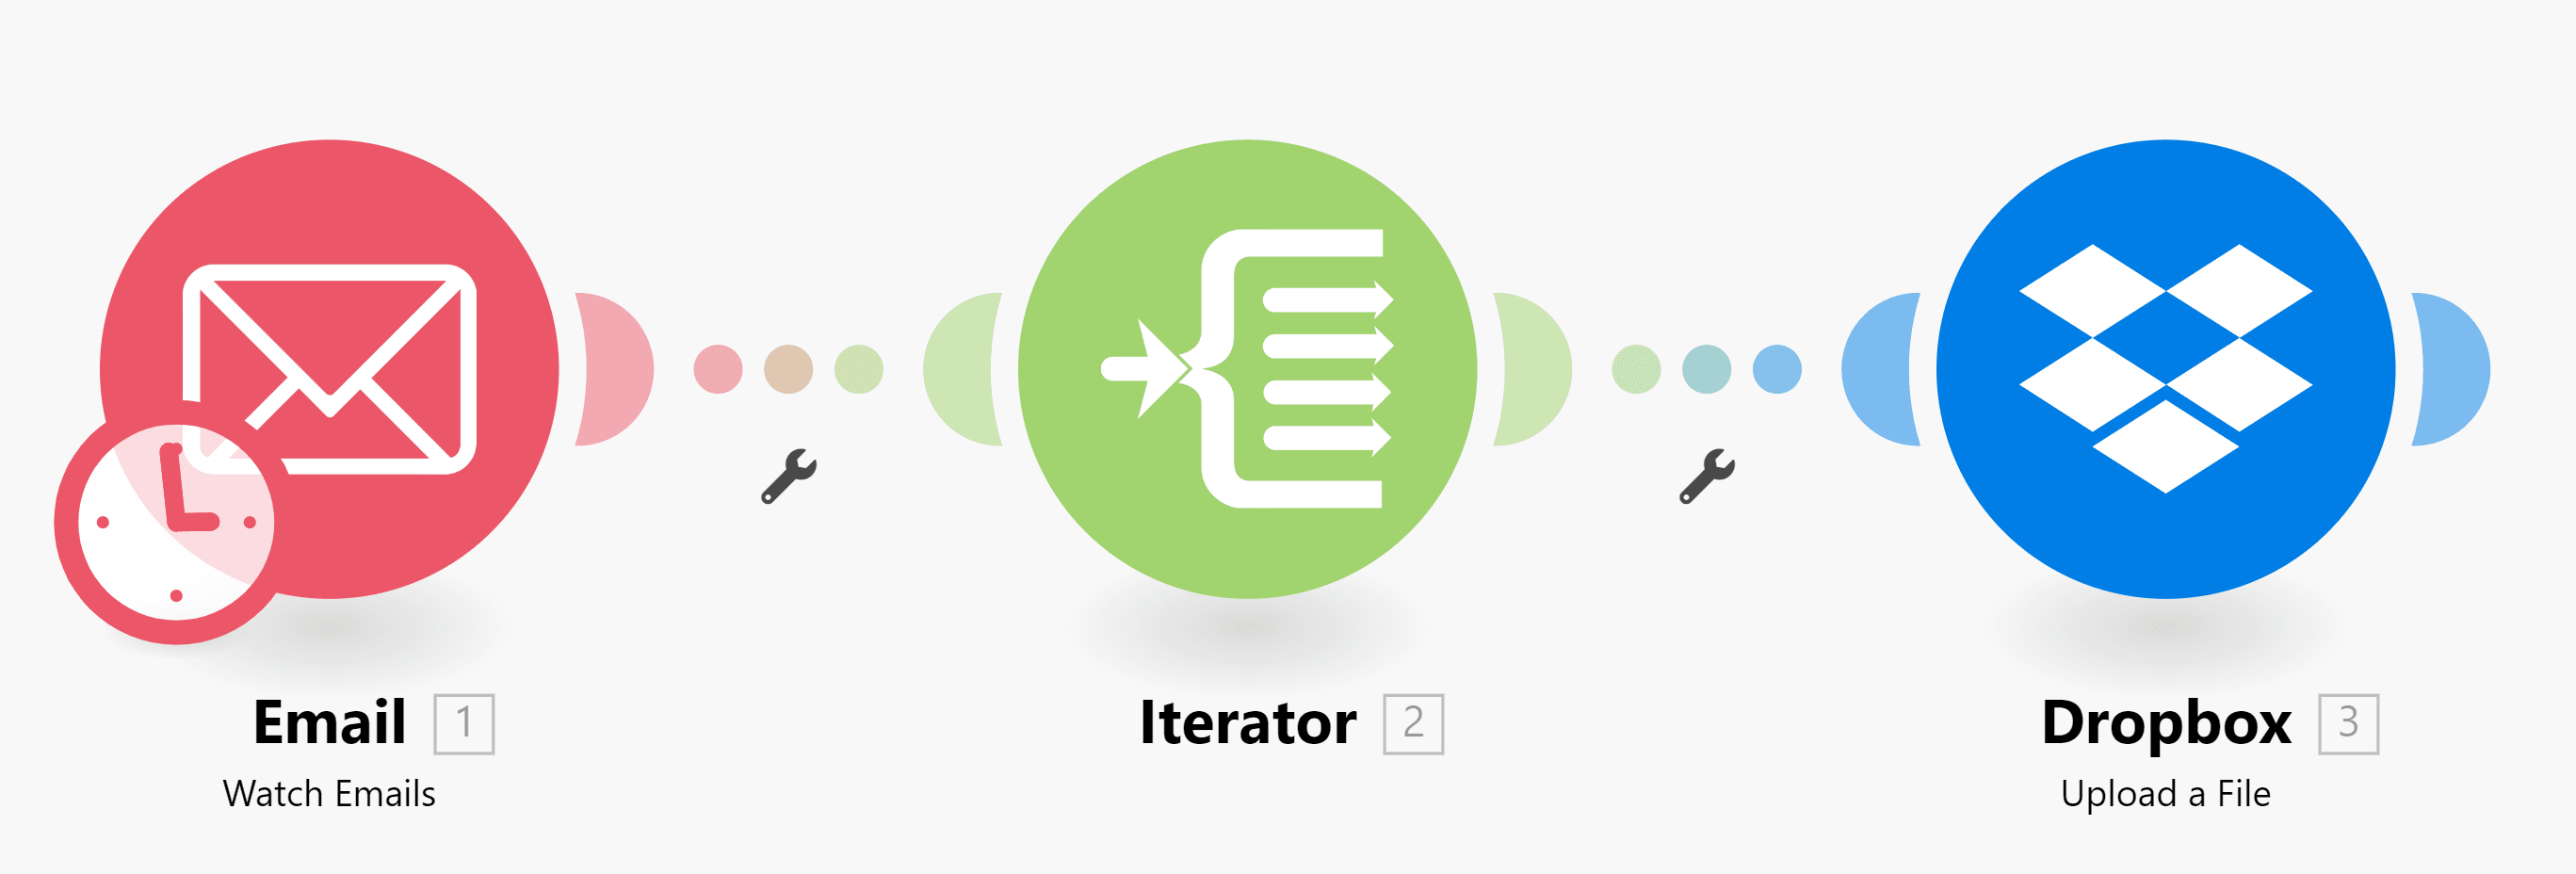 iterator-email-dropbox-integration